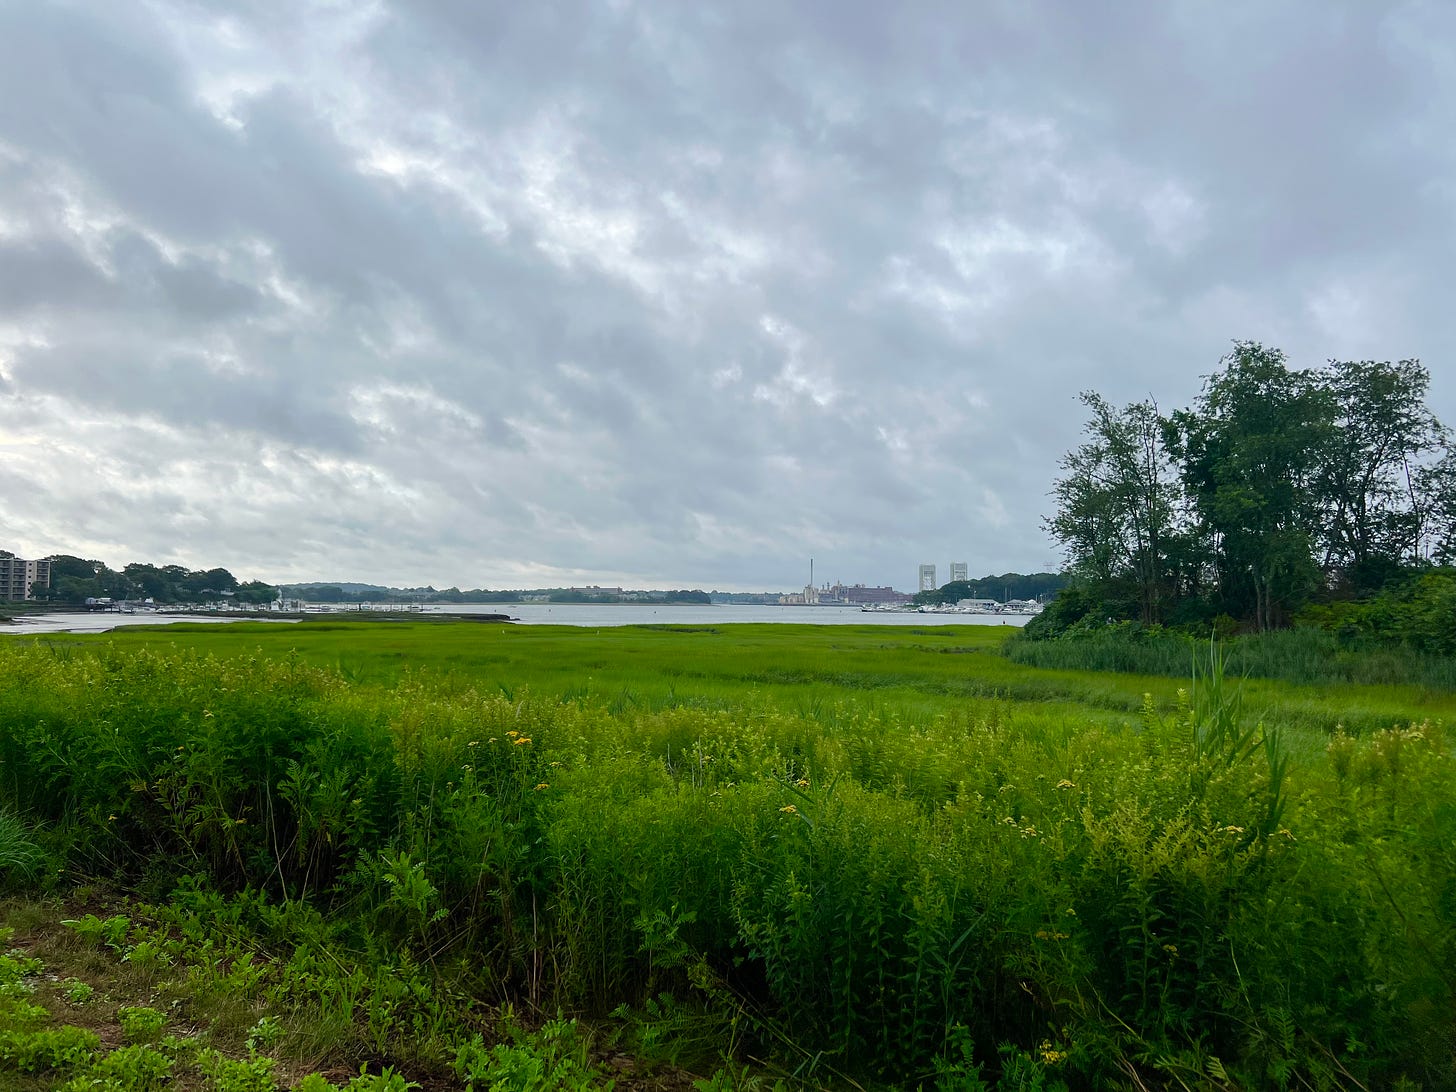 Restored Boston marshland at the industrial coast